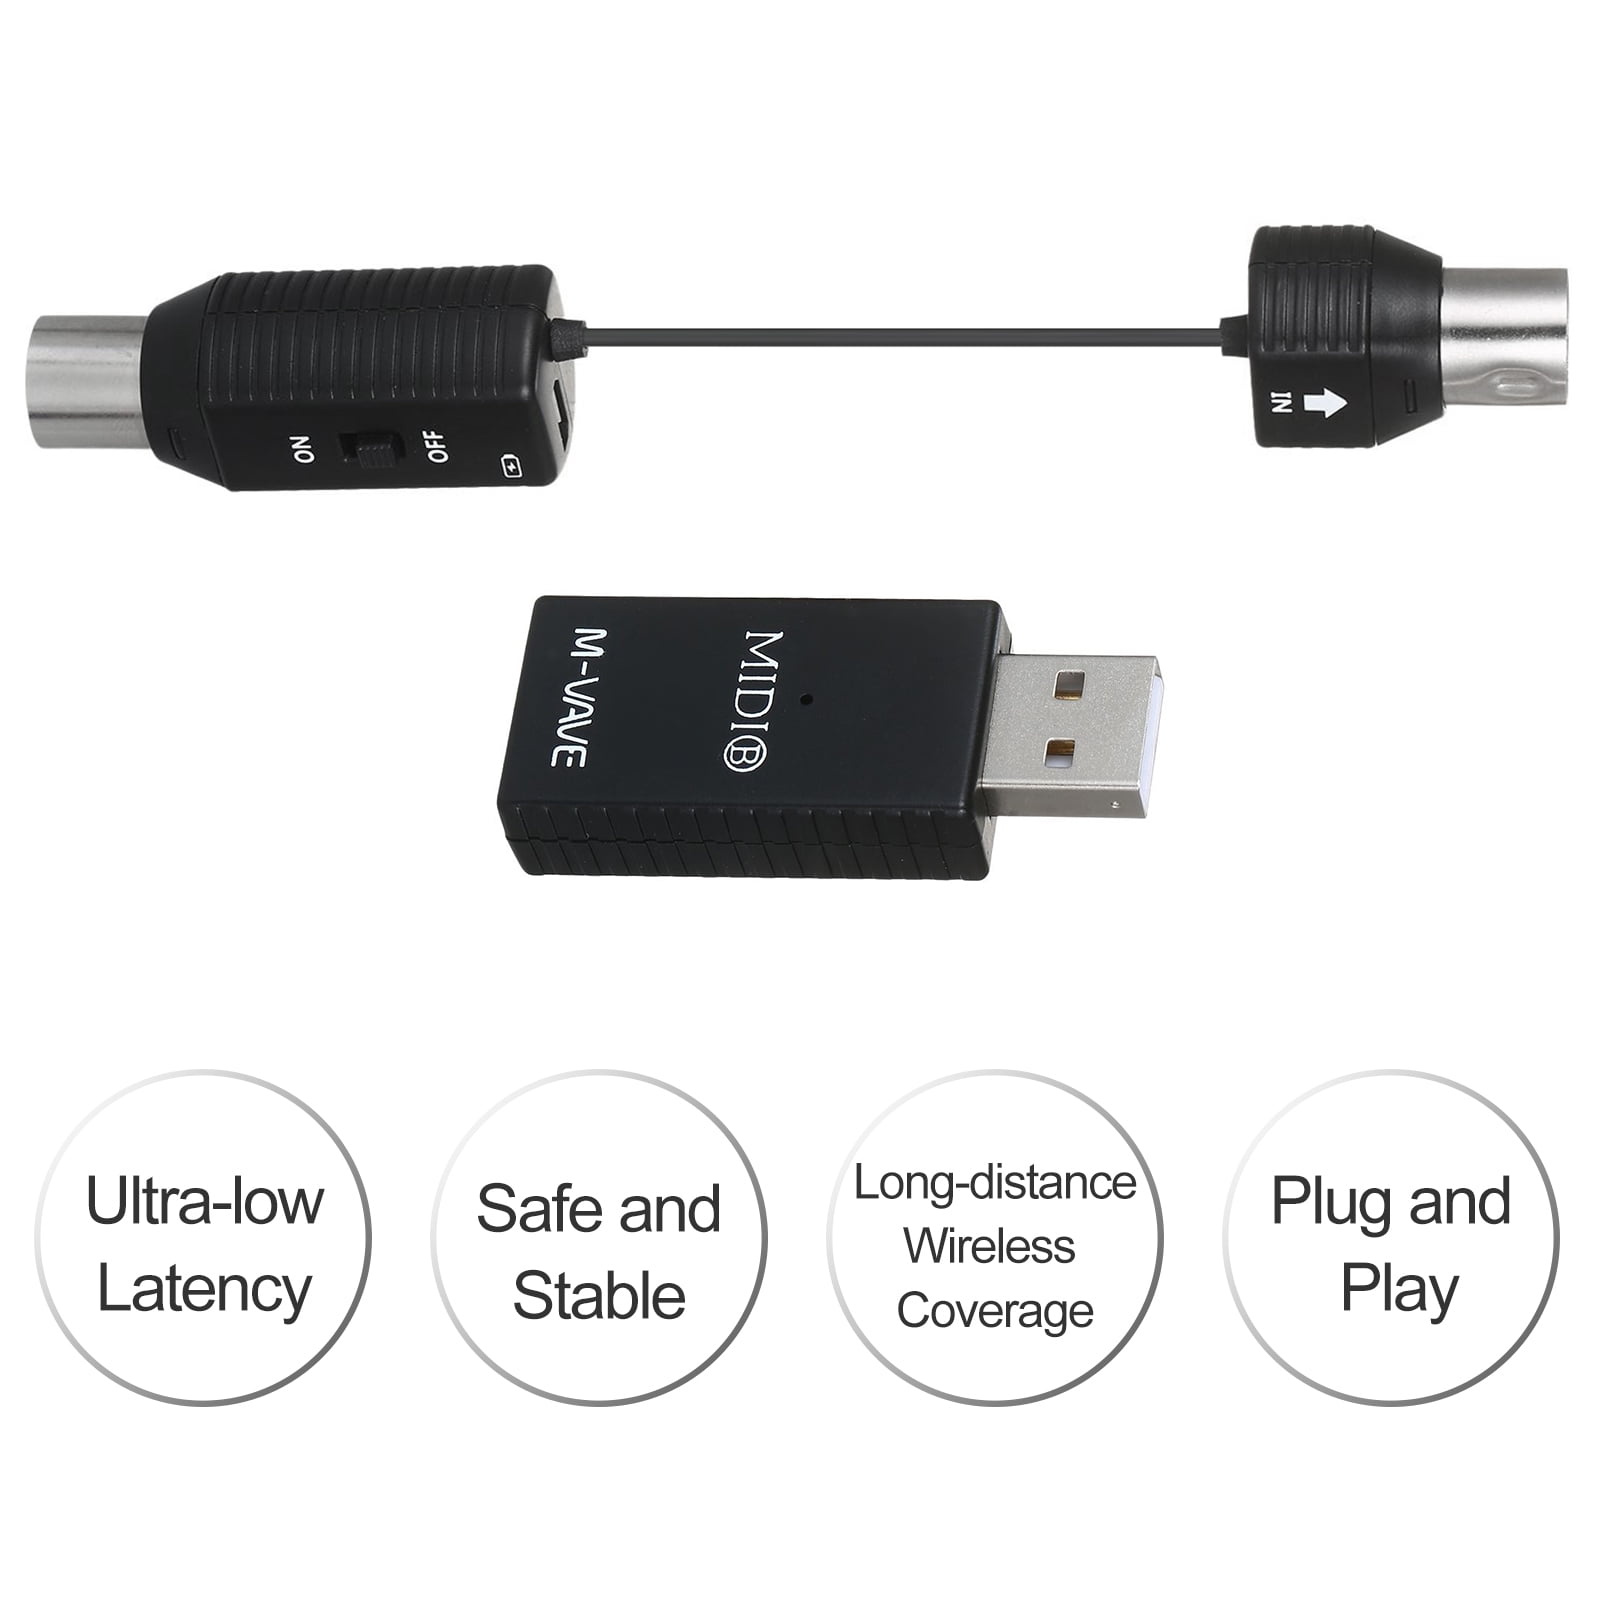 Bluetooth Wireless 5-pin DIN MIDI and USB Host adapter / MVAVE MS1